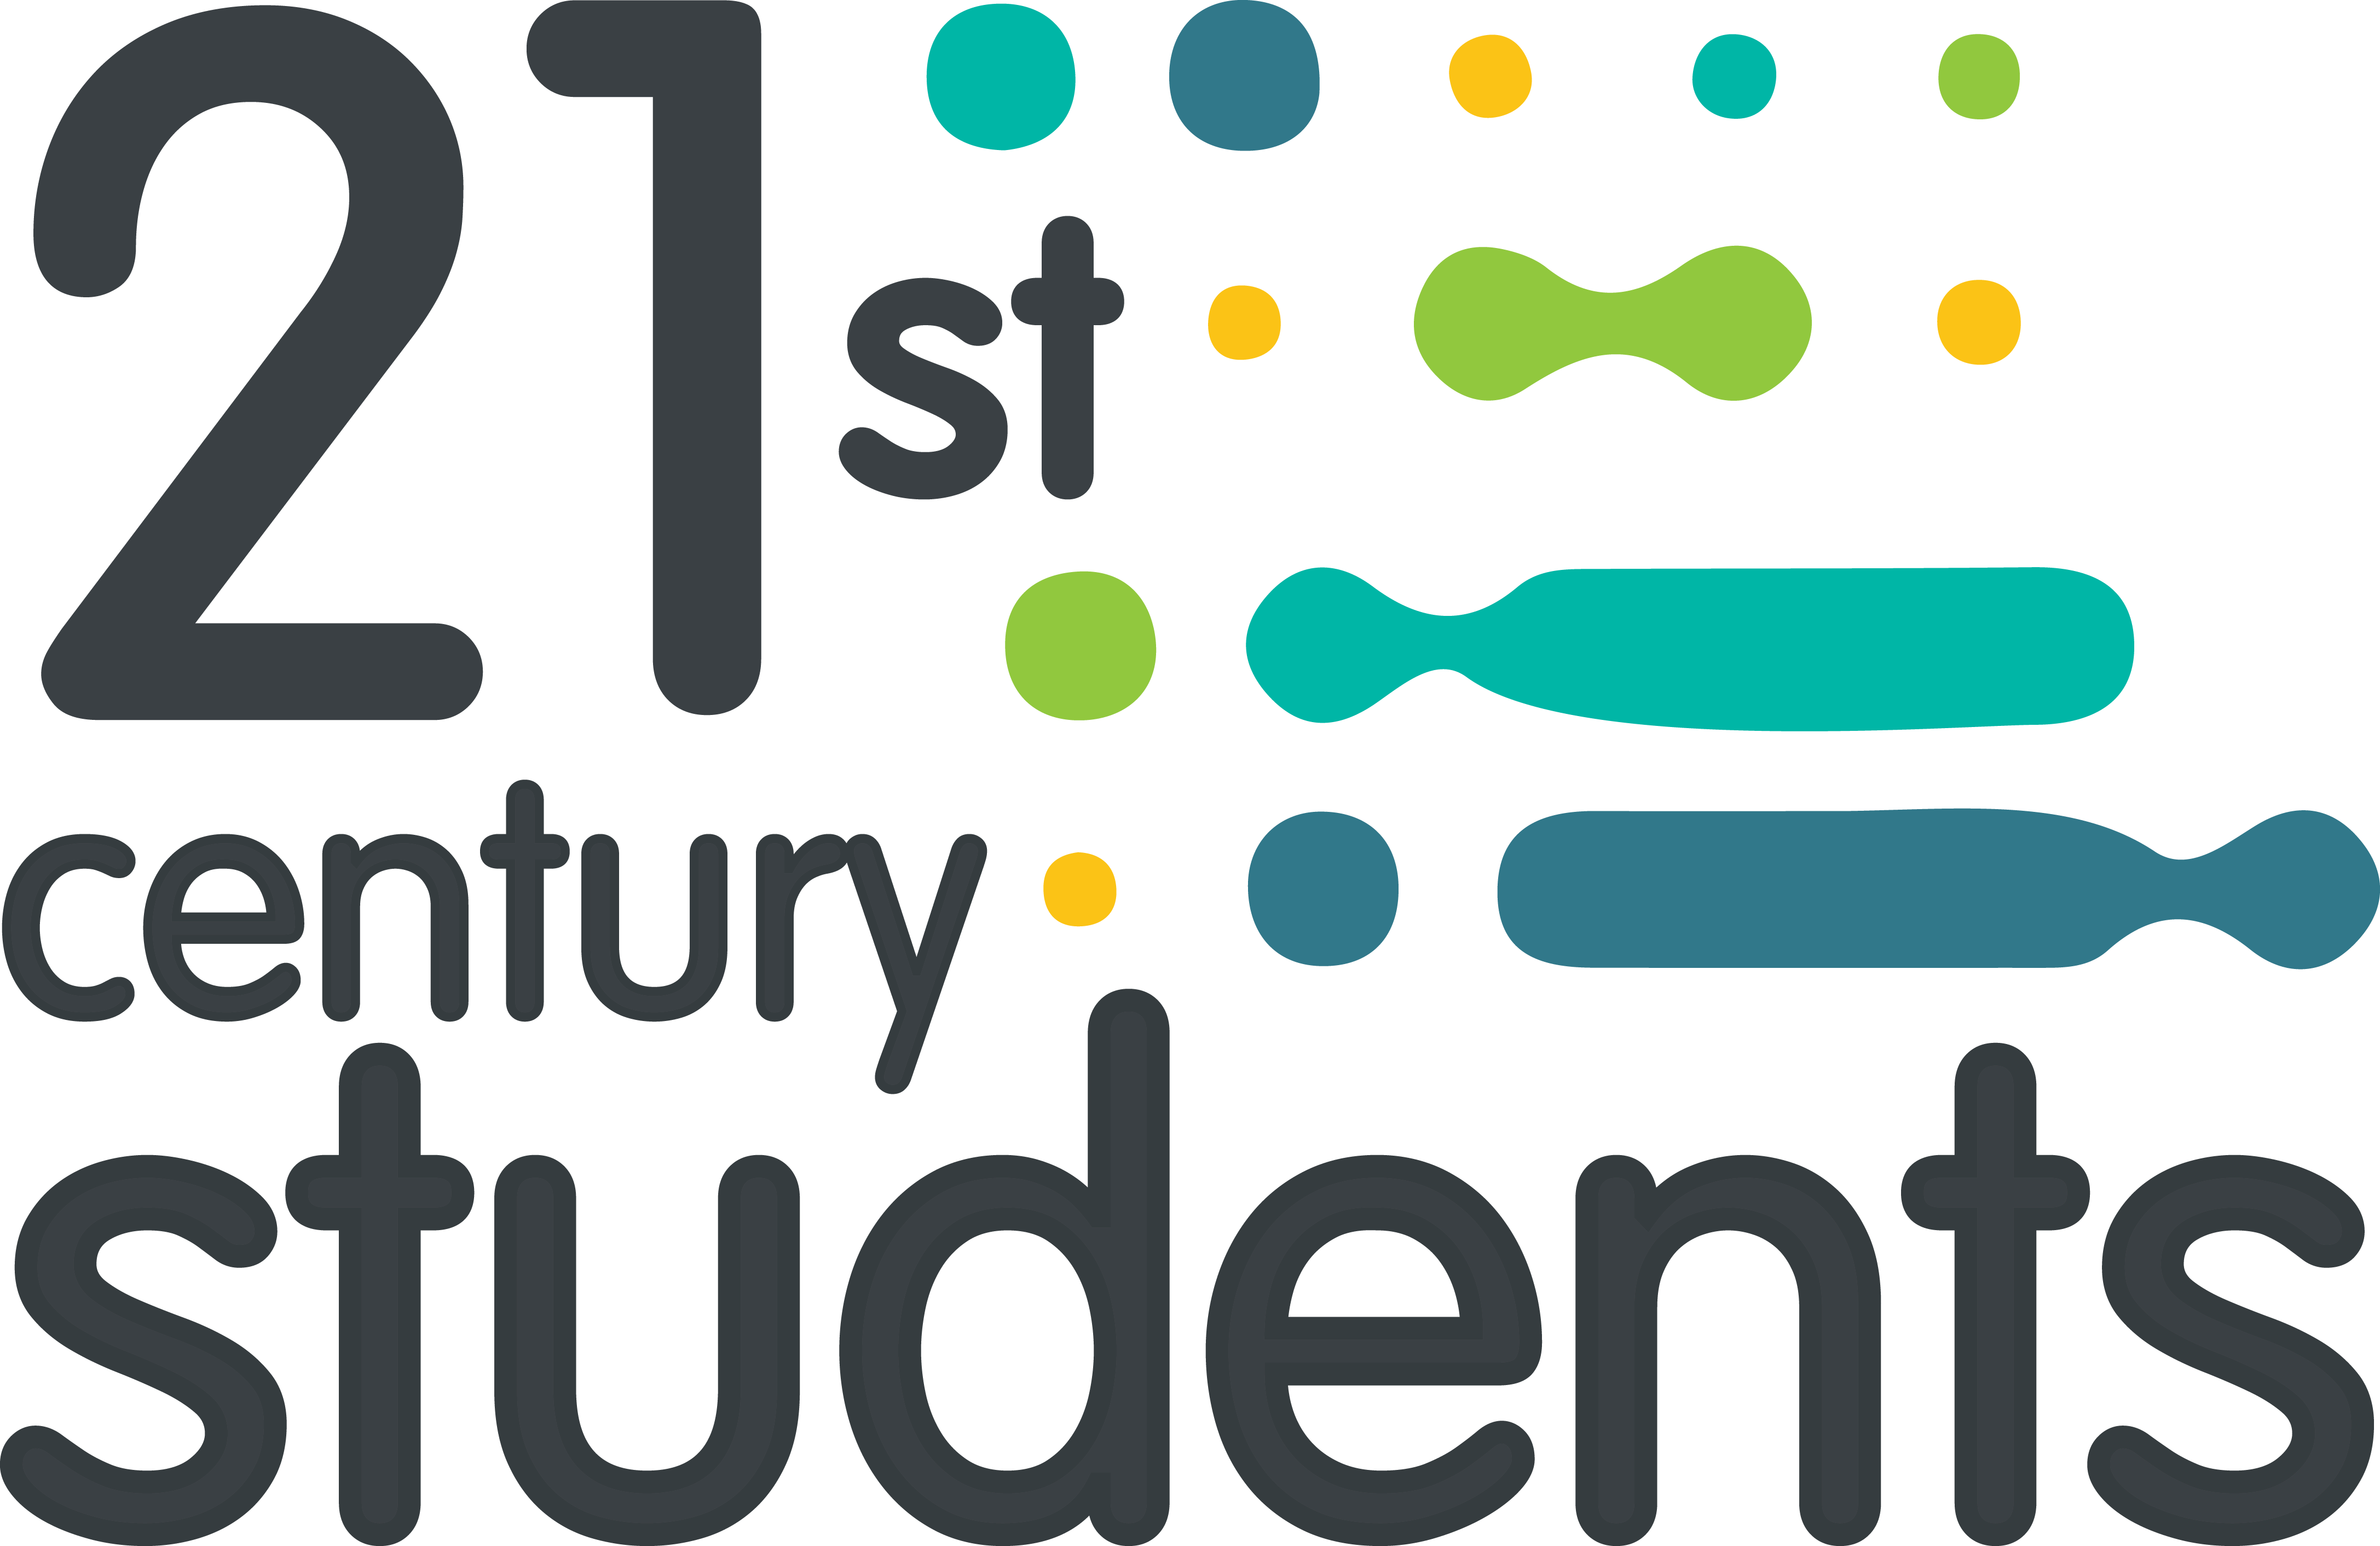 21st Century Students